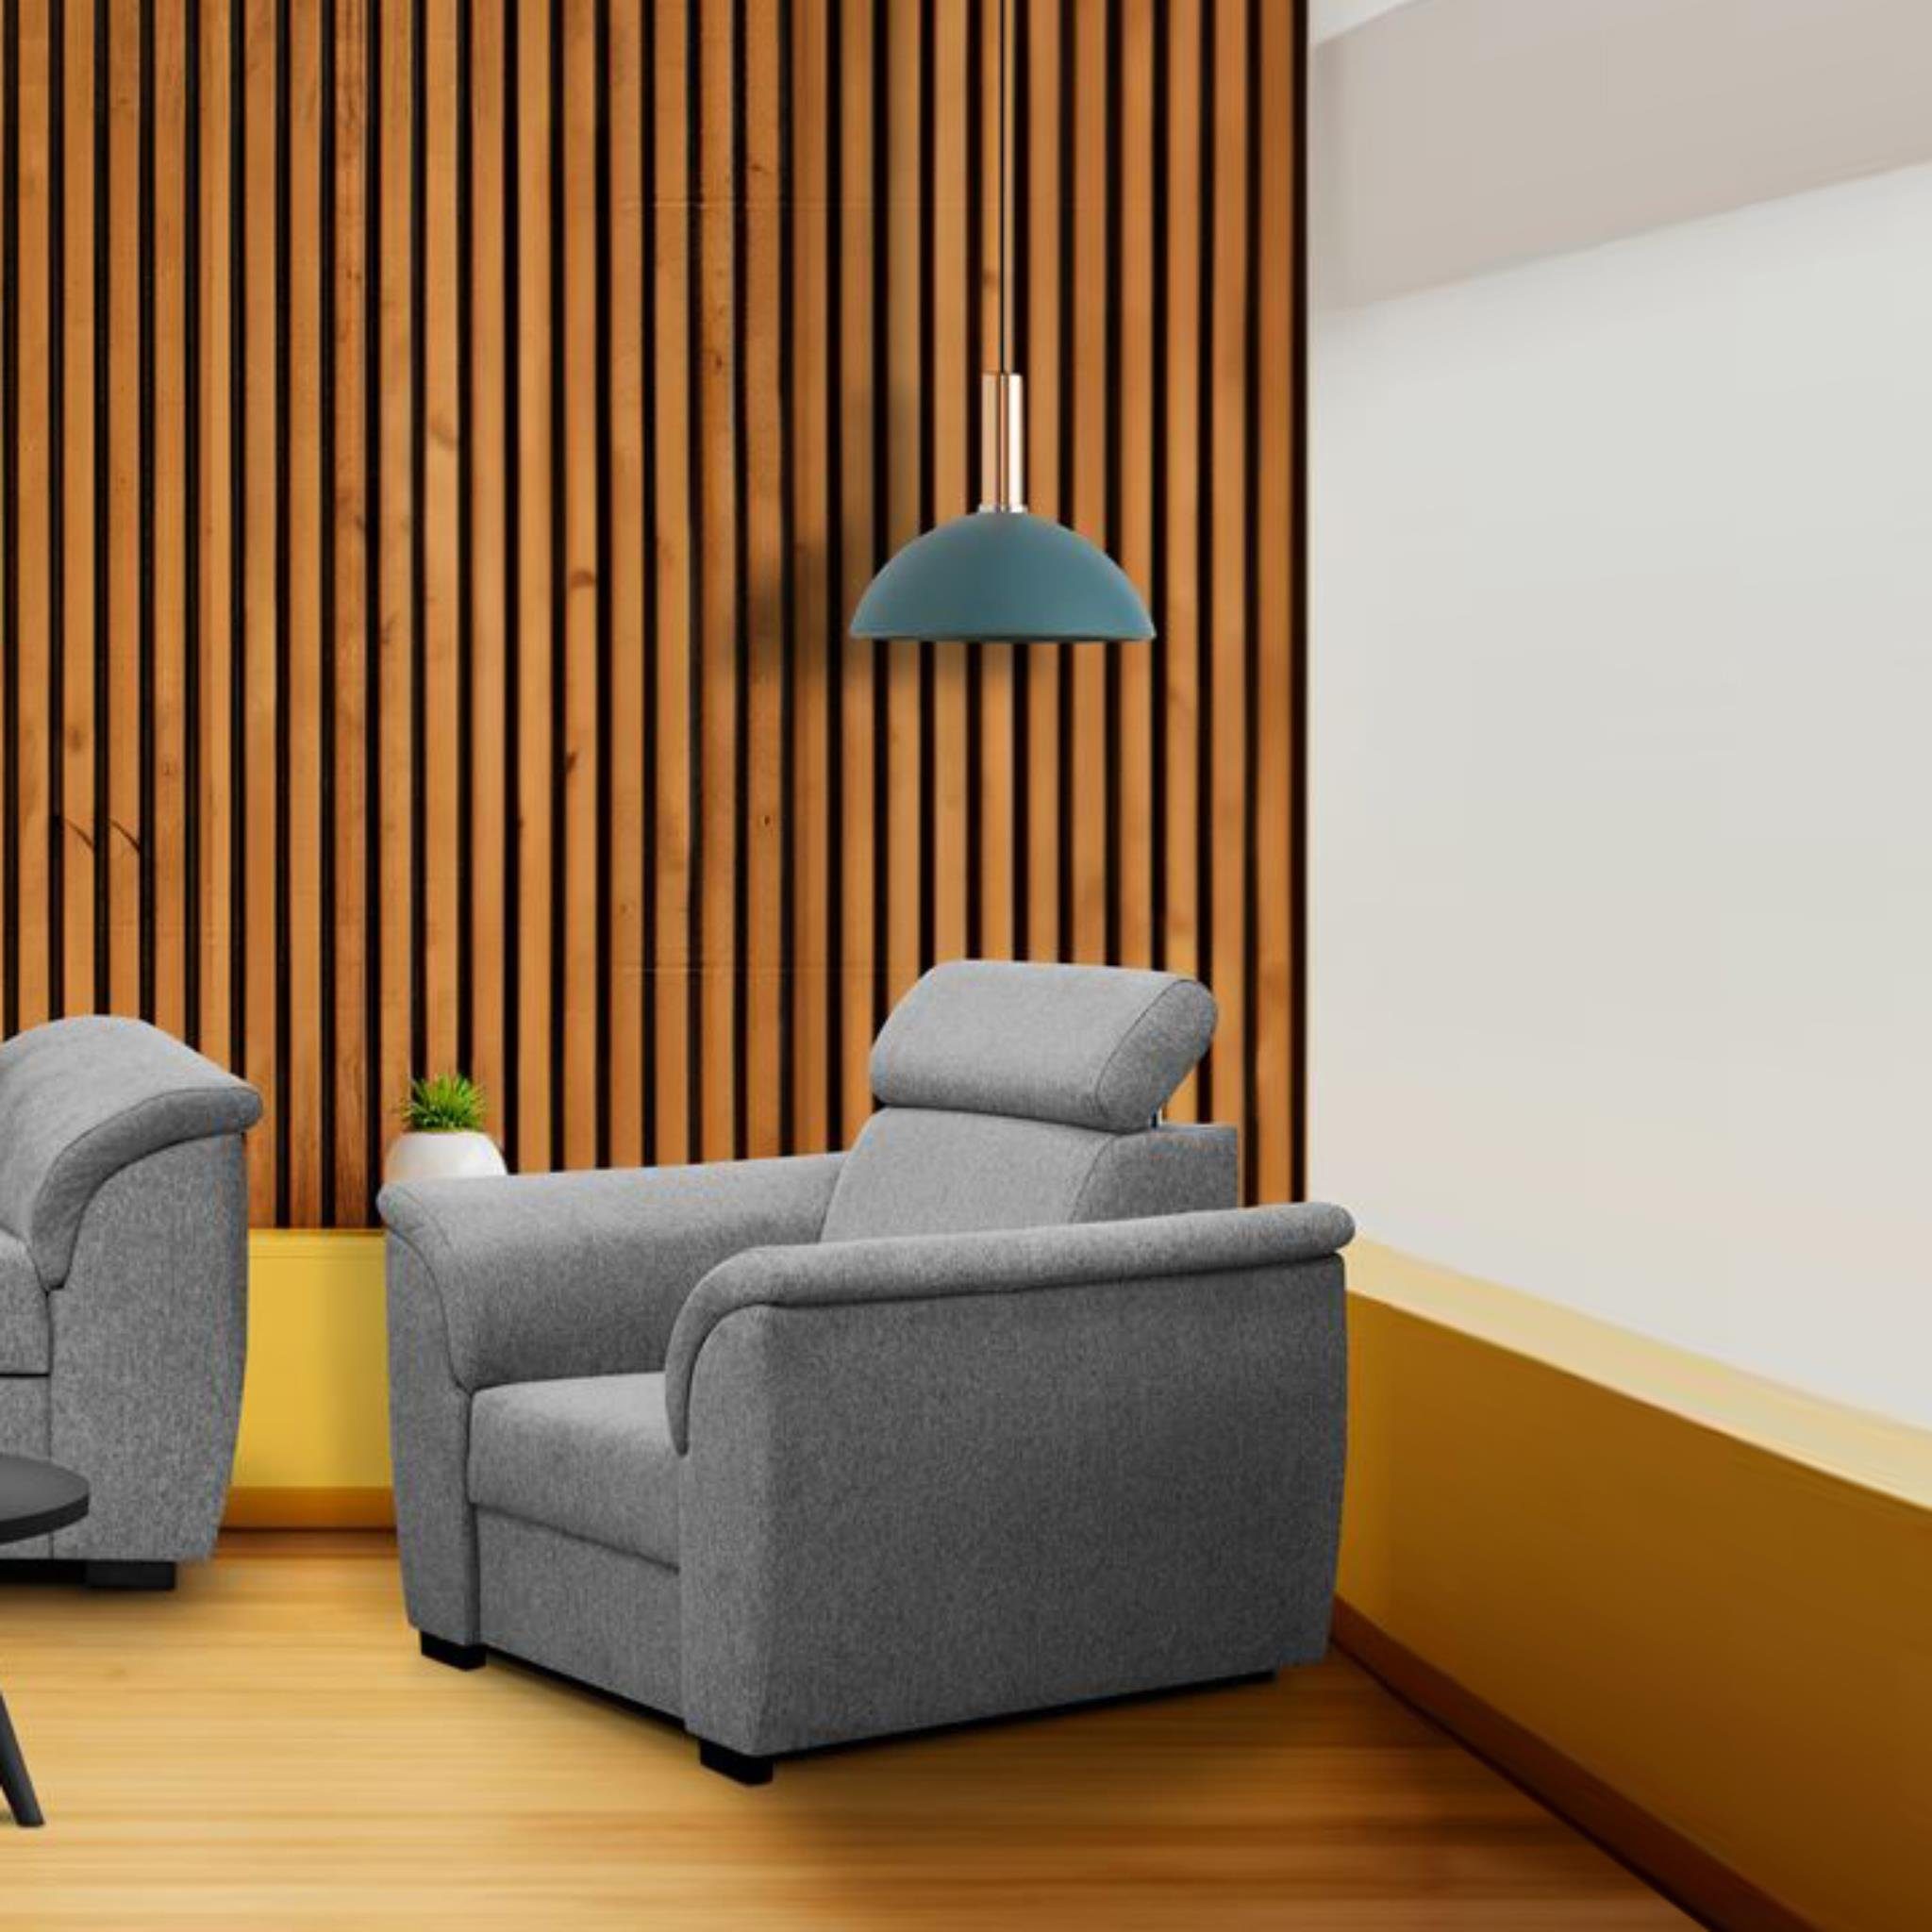 Beautysofa Relaxsessel Madera (modern Lounge Polstersessel mit Wellenfedern), stilvoll Sessel mit verstellbare Kopfstütze Grau (matana 03)